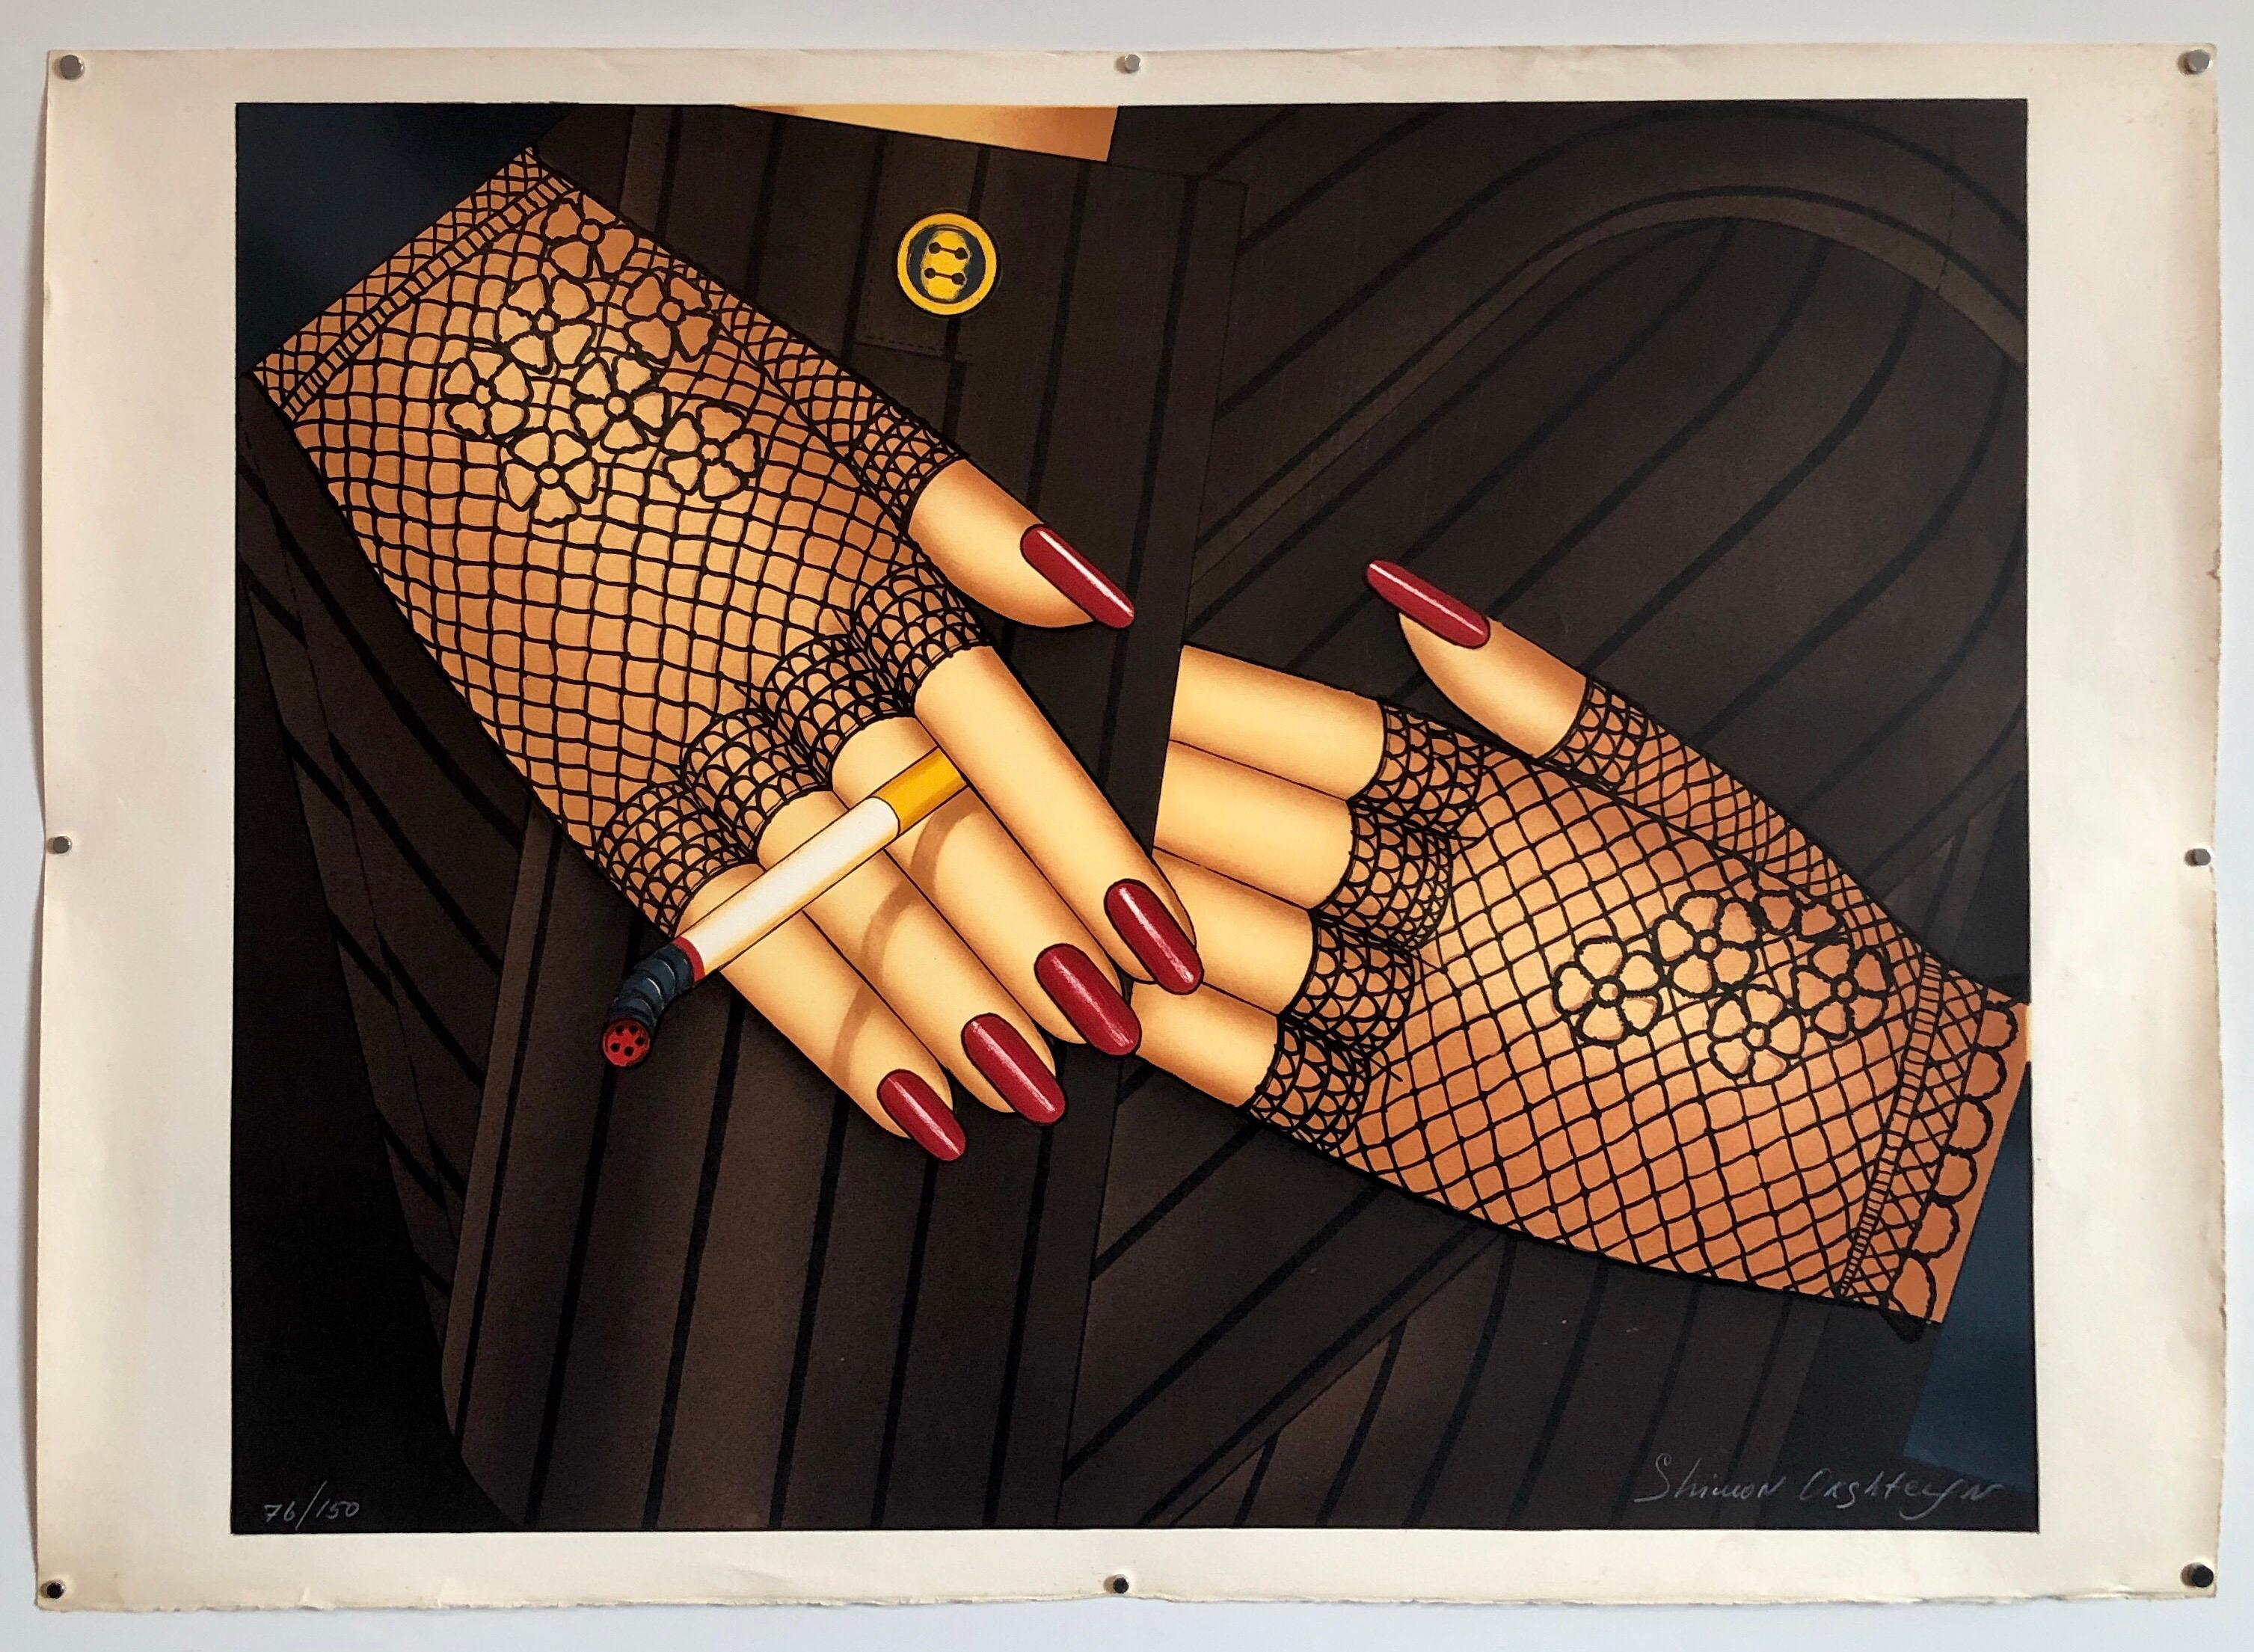 Russian Pop Art Silkscreen Smoking Crossed Hands Mains Croisees Serigraph - Black Figurative Print by Shimon Okshteyn